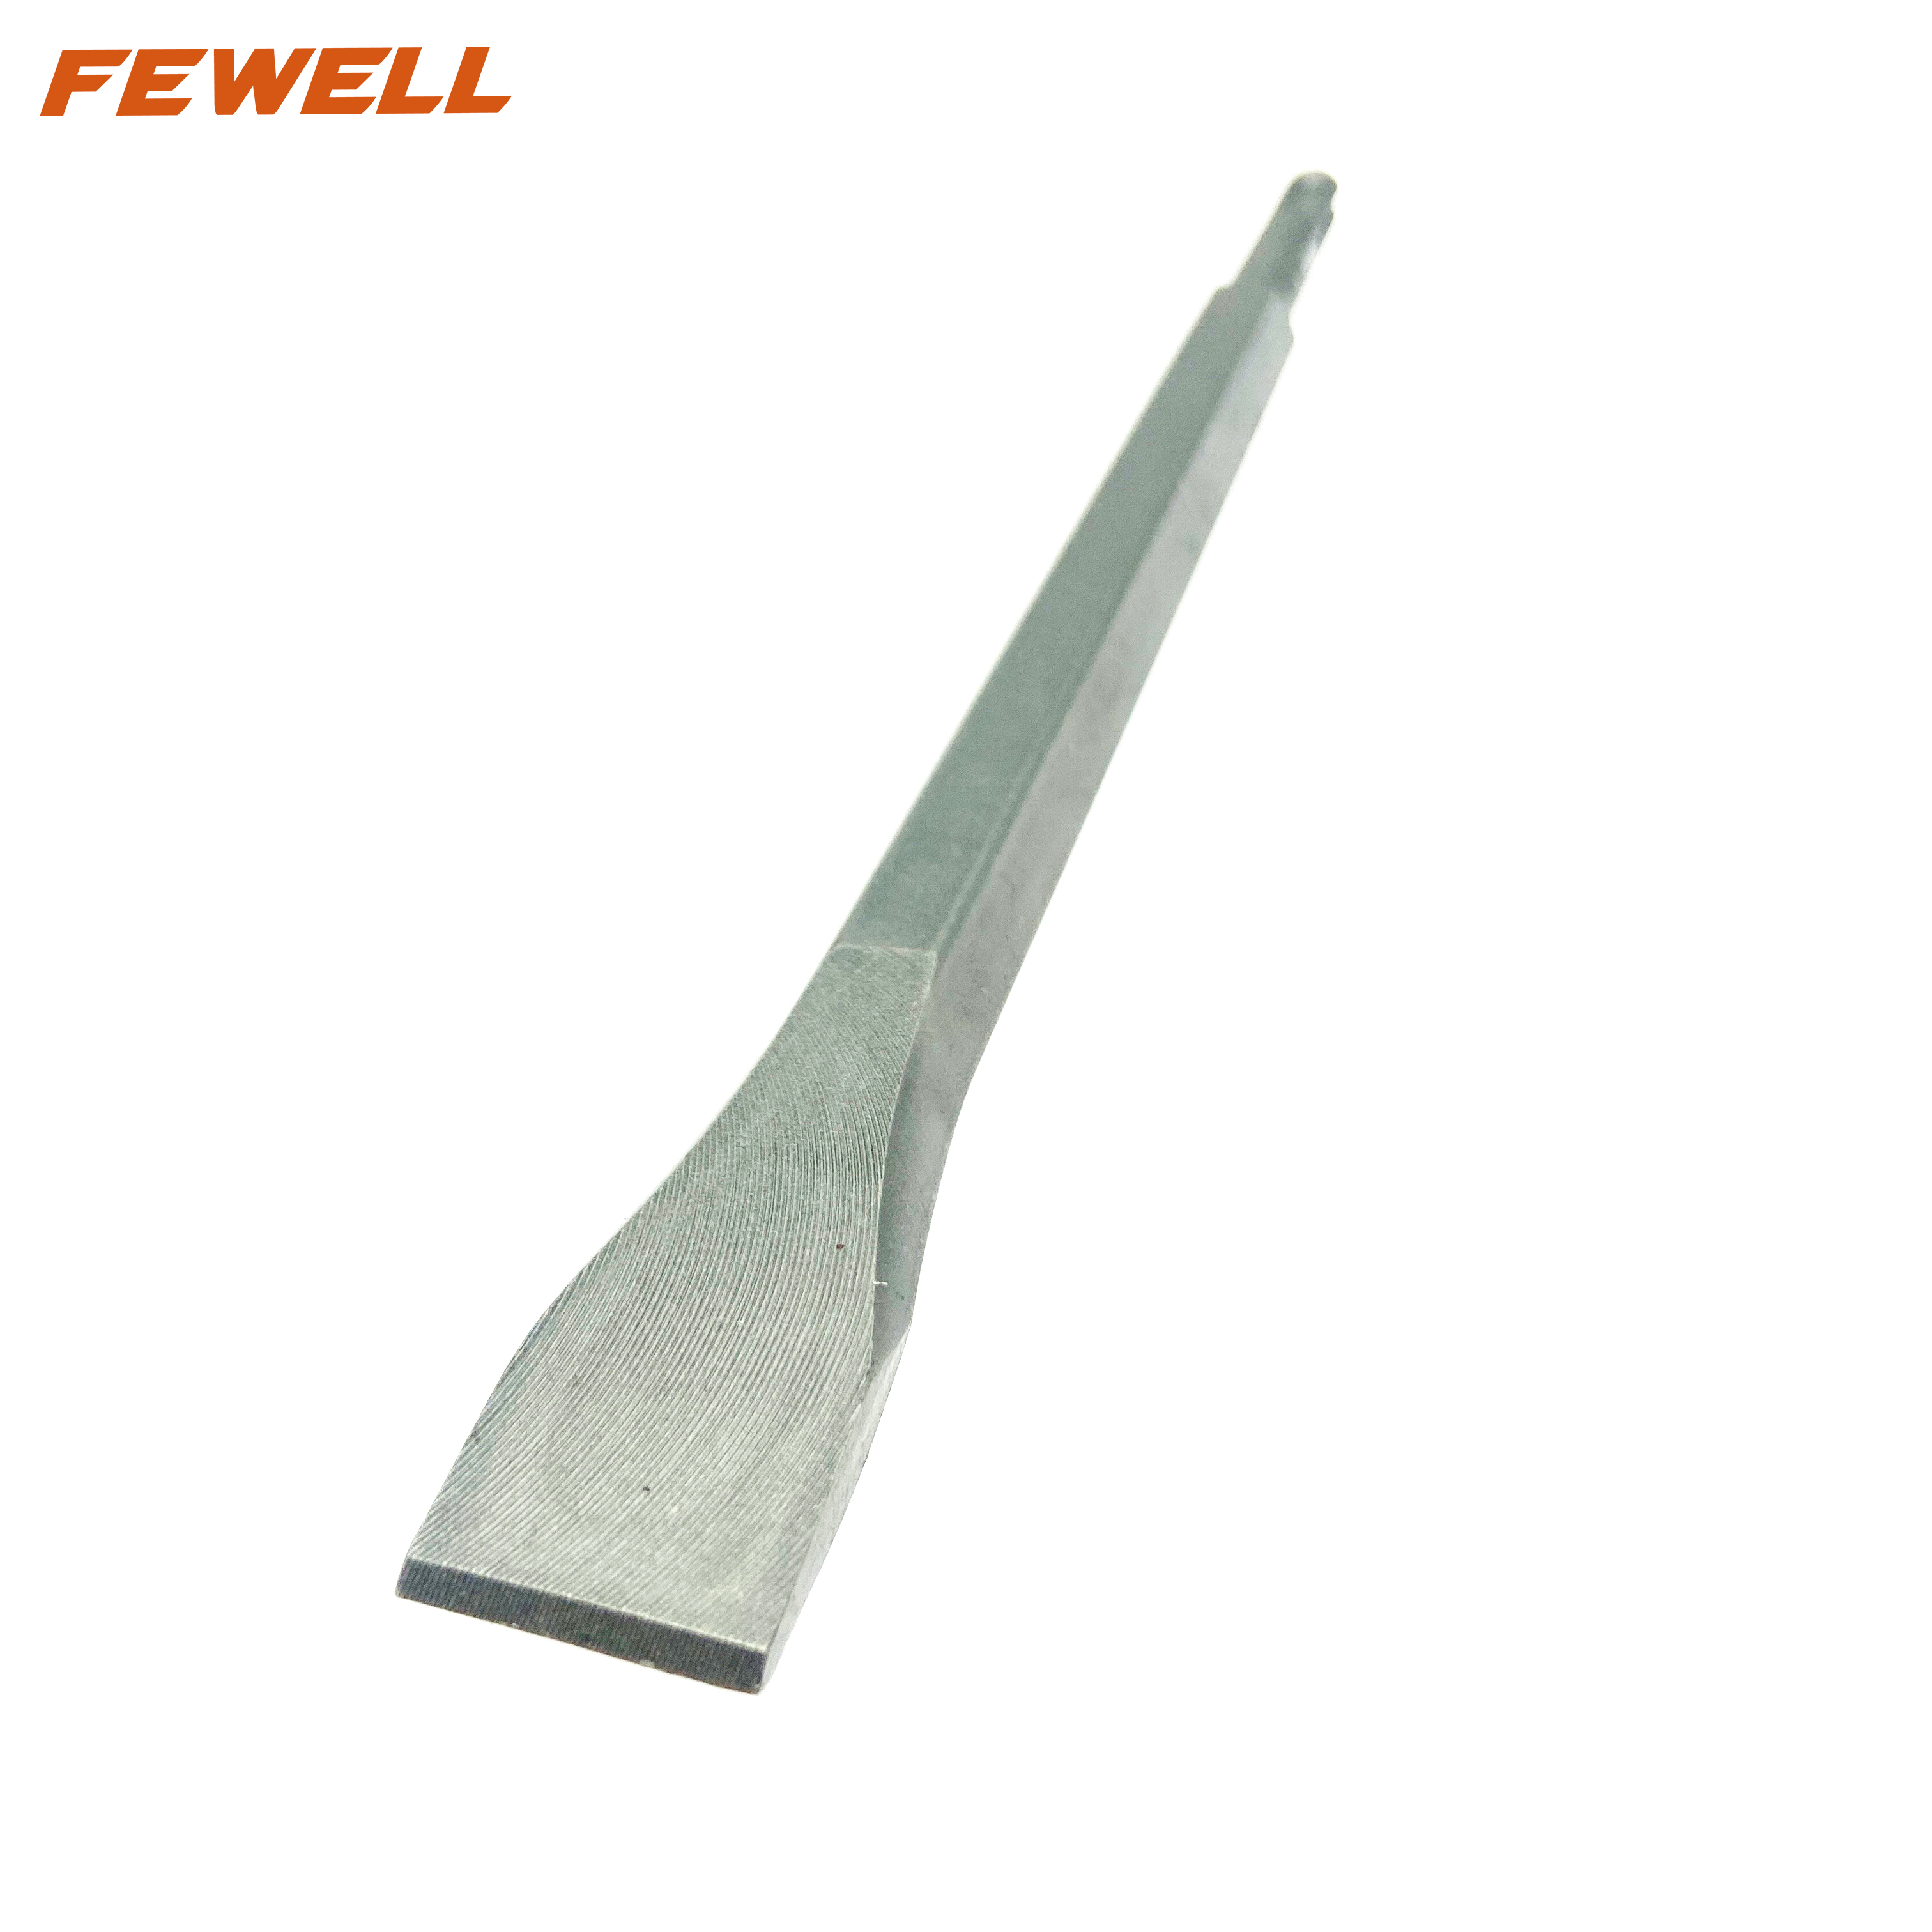 High quality 14x20mm Electric Hammer Drill Bit SDS Plus shank Flat Chisel for tile Masonry Concrete Brick stone